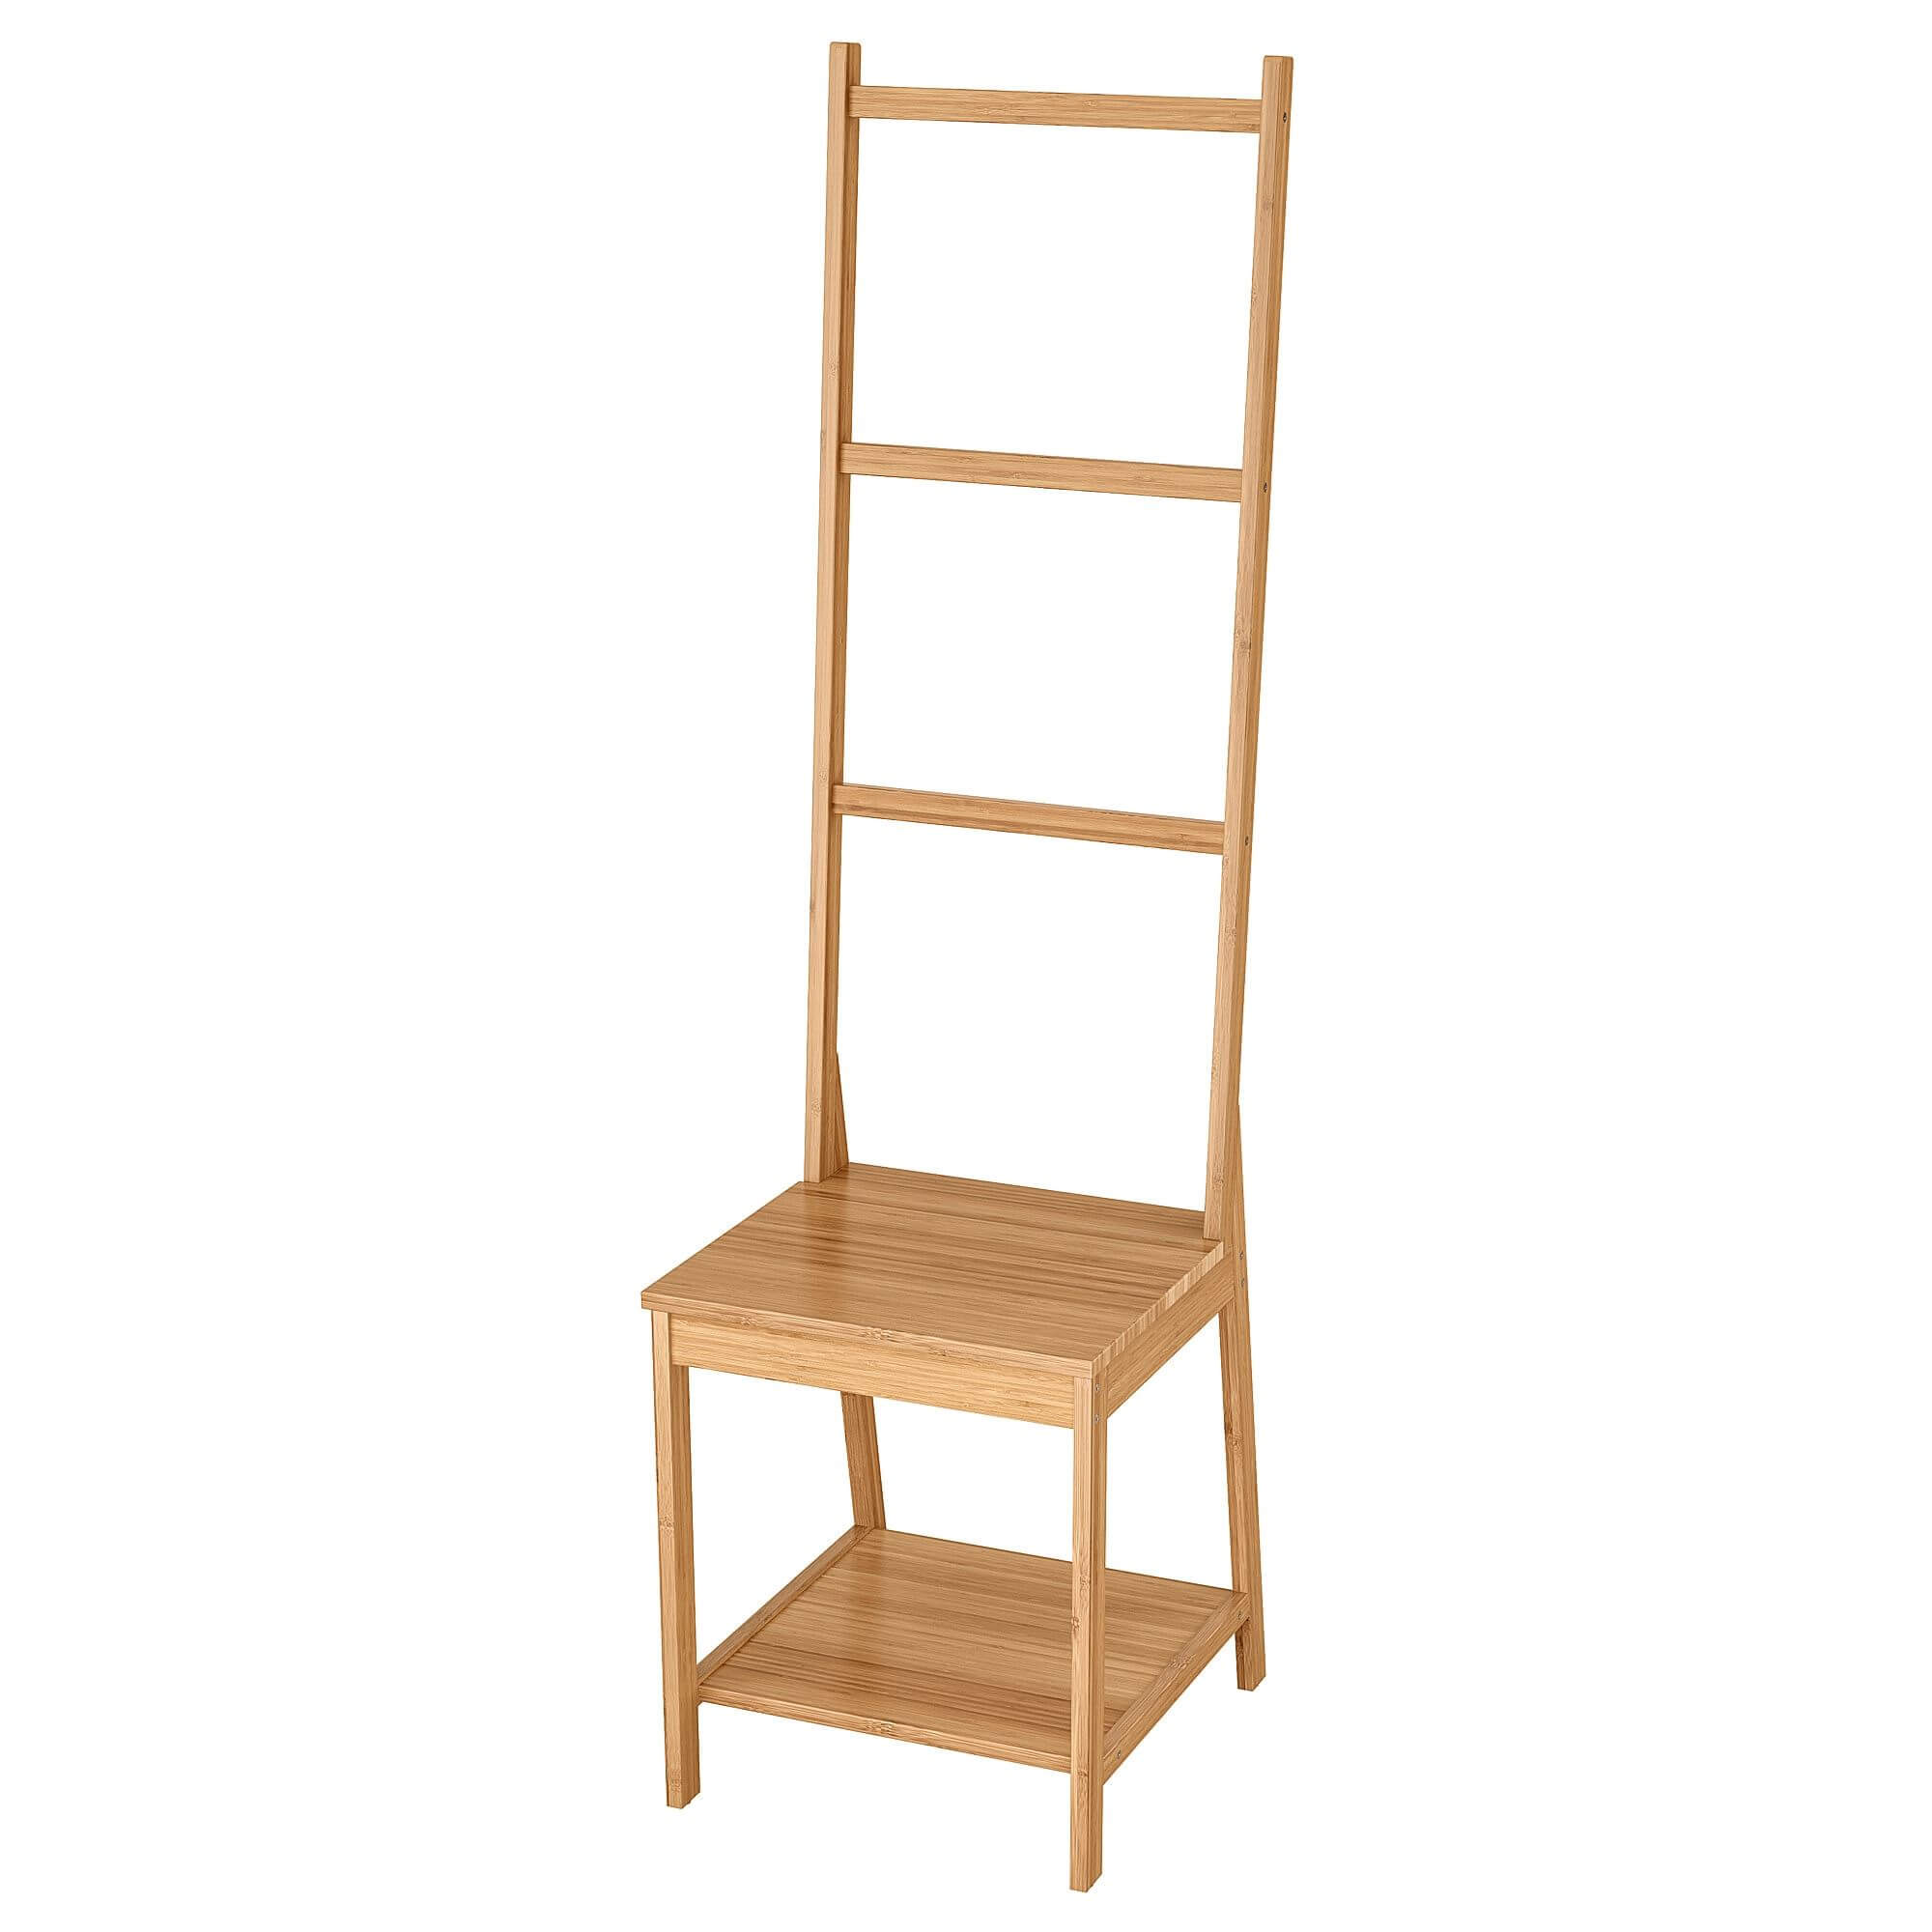 Стул с держателями для полотенец Ikea Ragrund, 39x44x140, бамбук ikea йокмокк стул